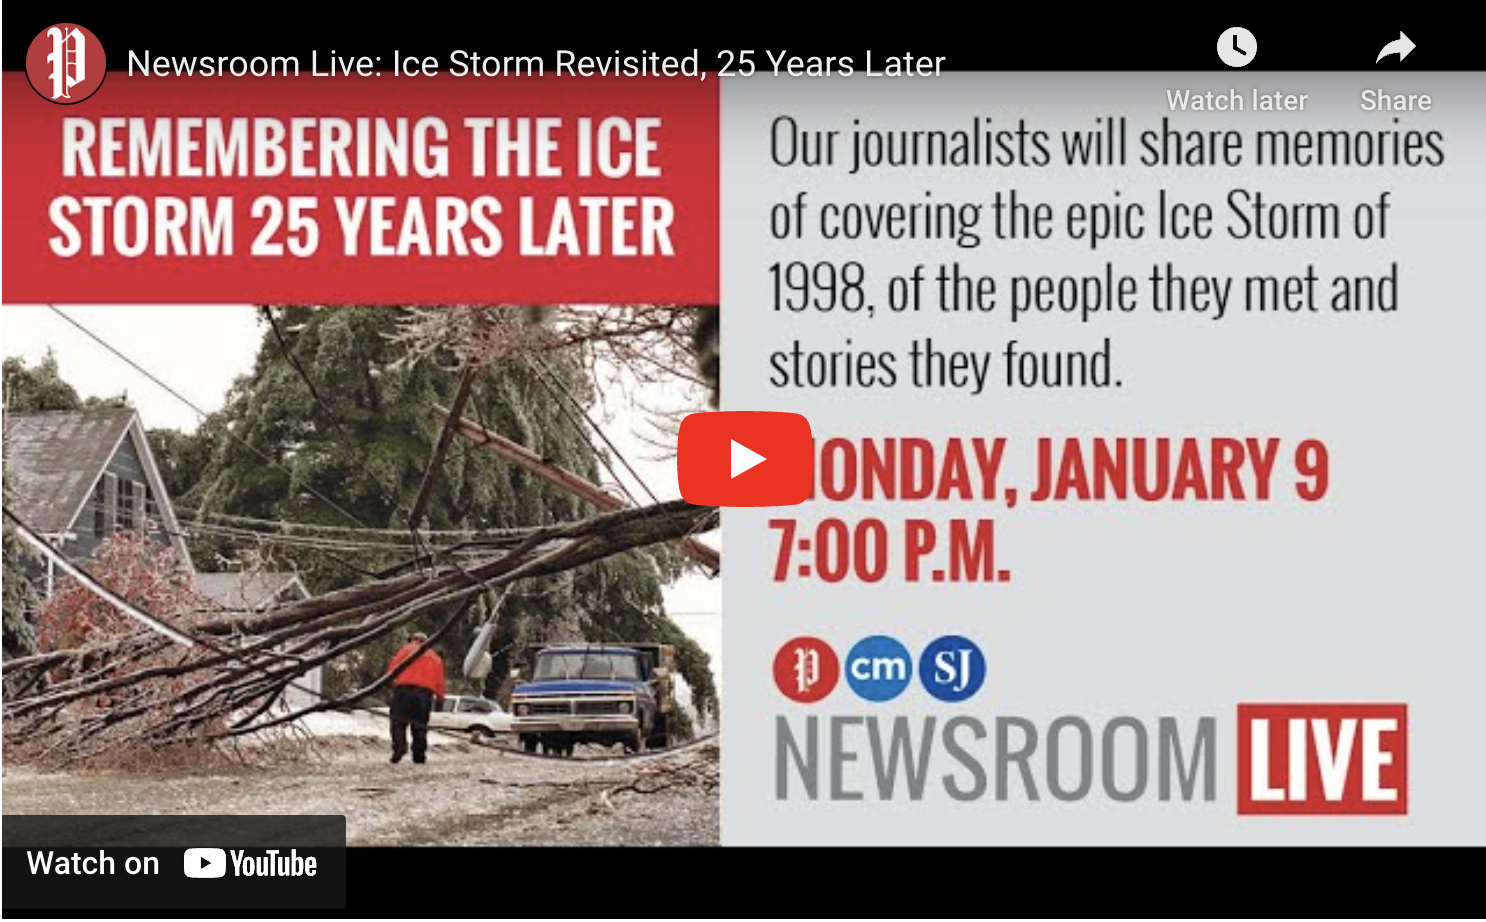 newsroom live: the 1998 ice storm